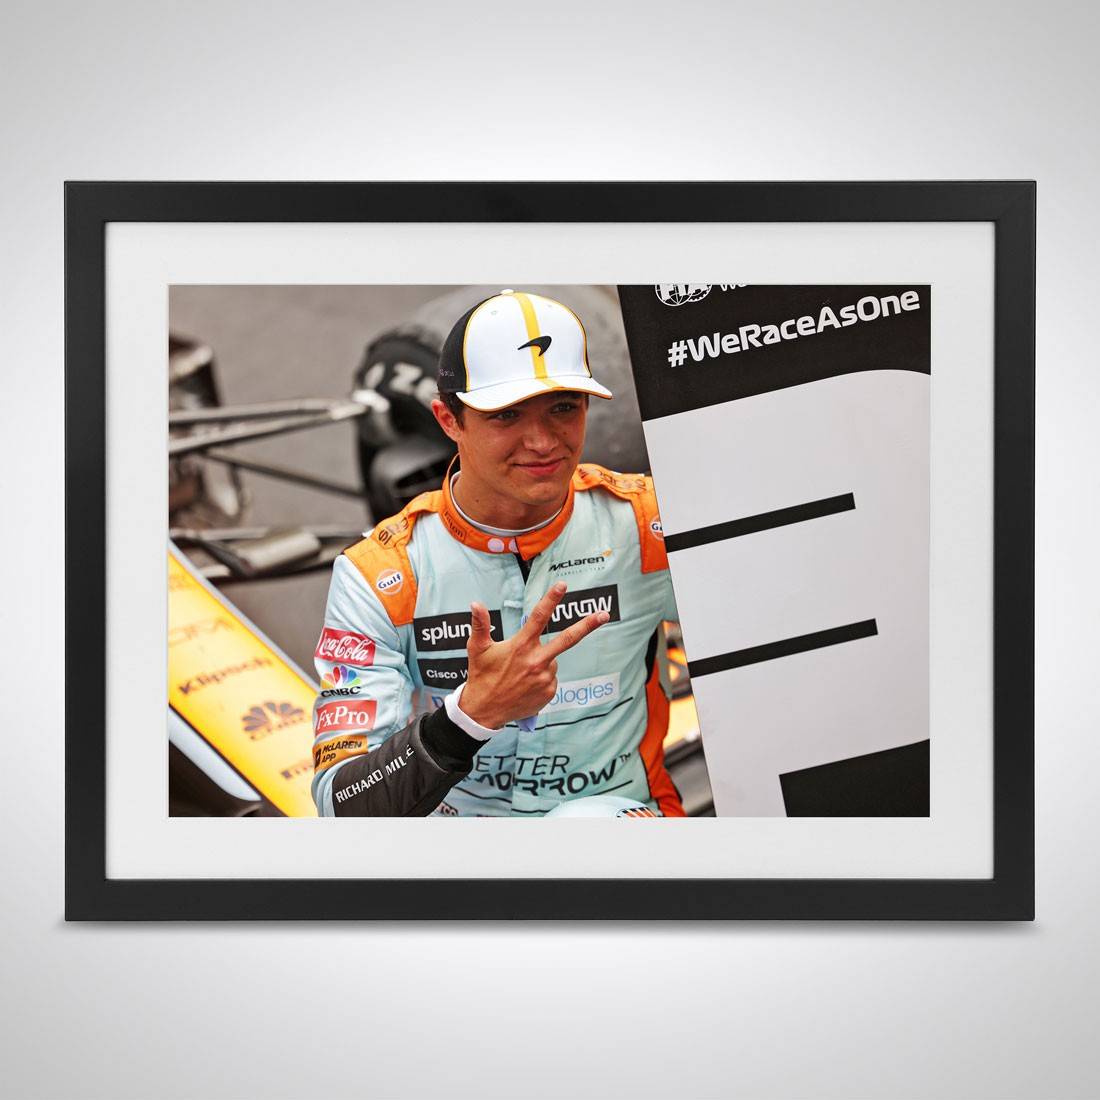 Framed photo of Lando Norris with his McLaren car at the Monaco circuit